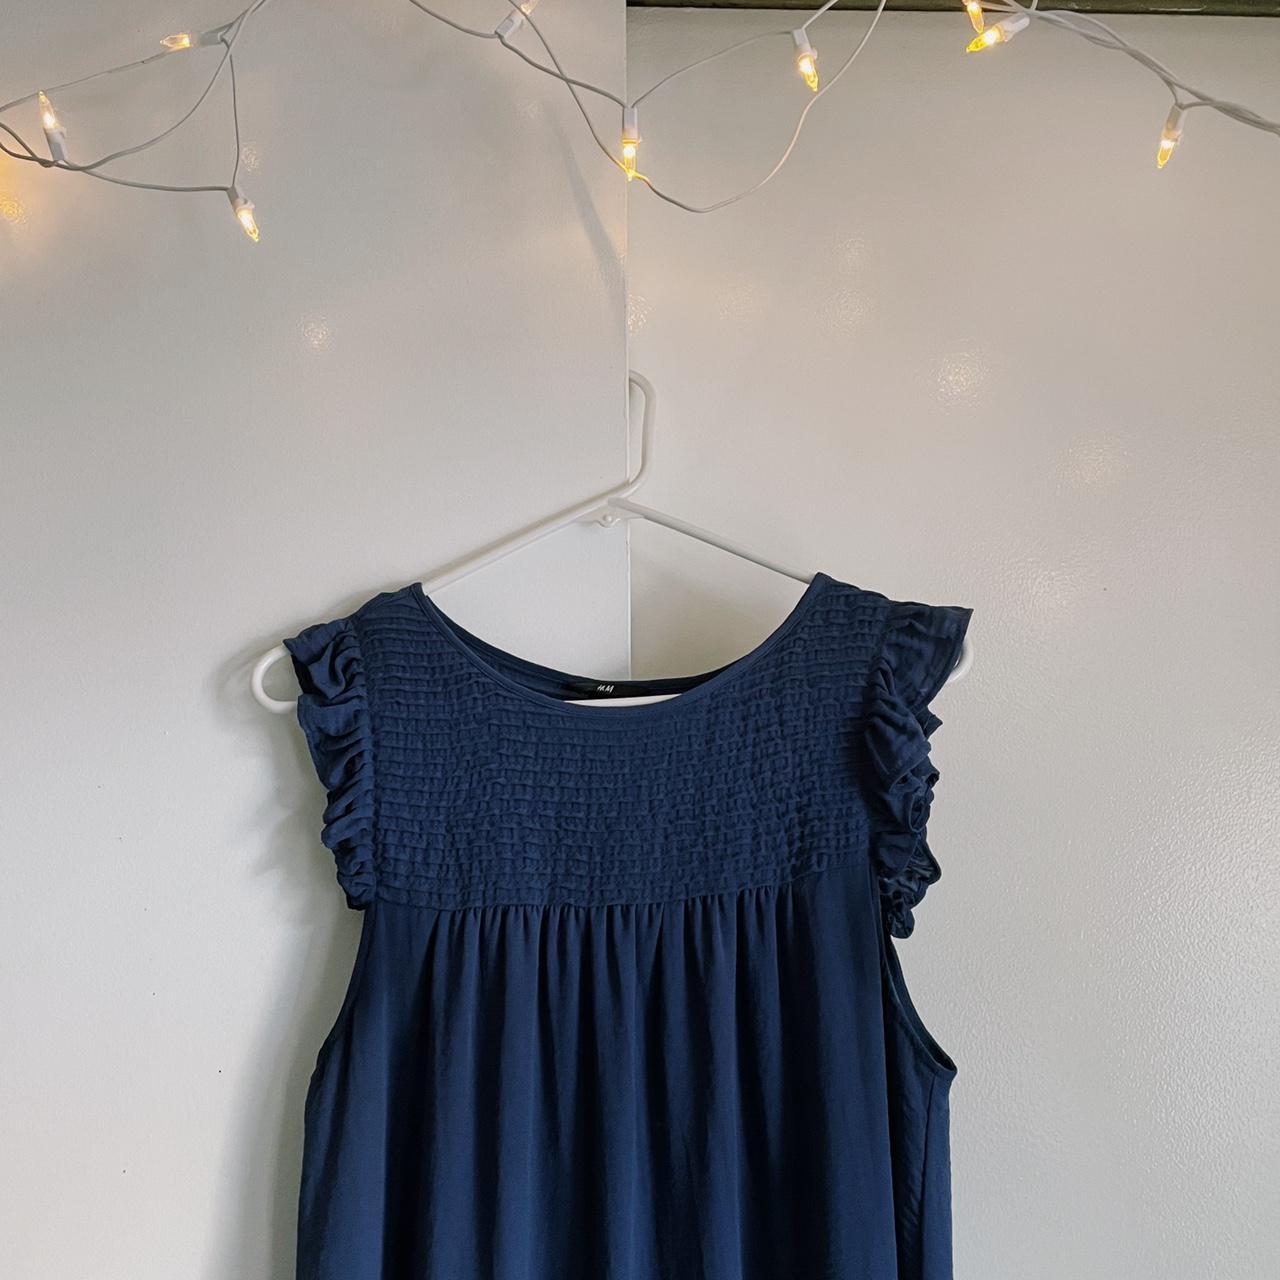 H&M Blue Babydoll Dress - very comfortable -... - Depop